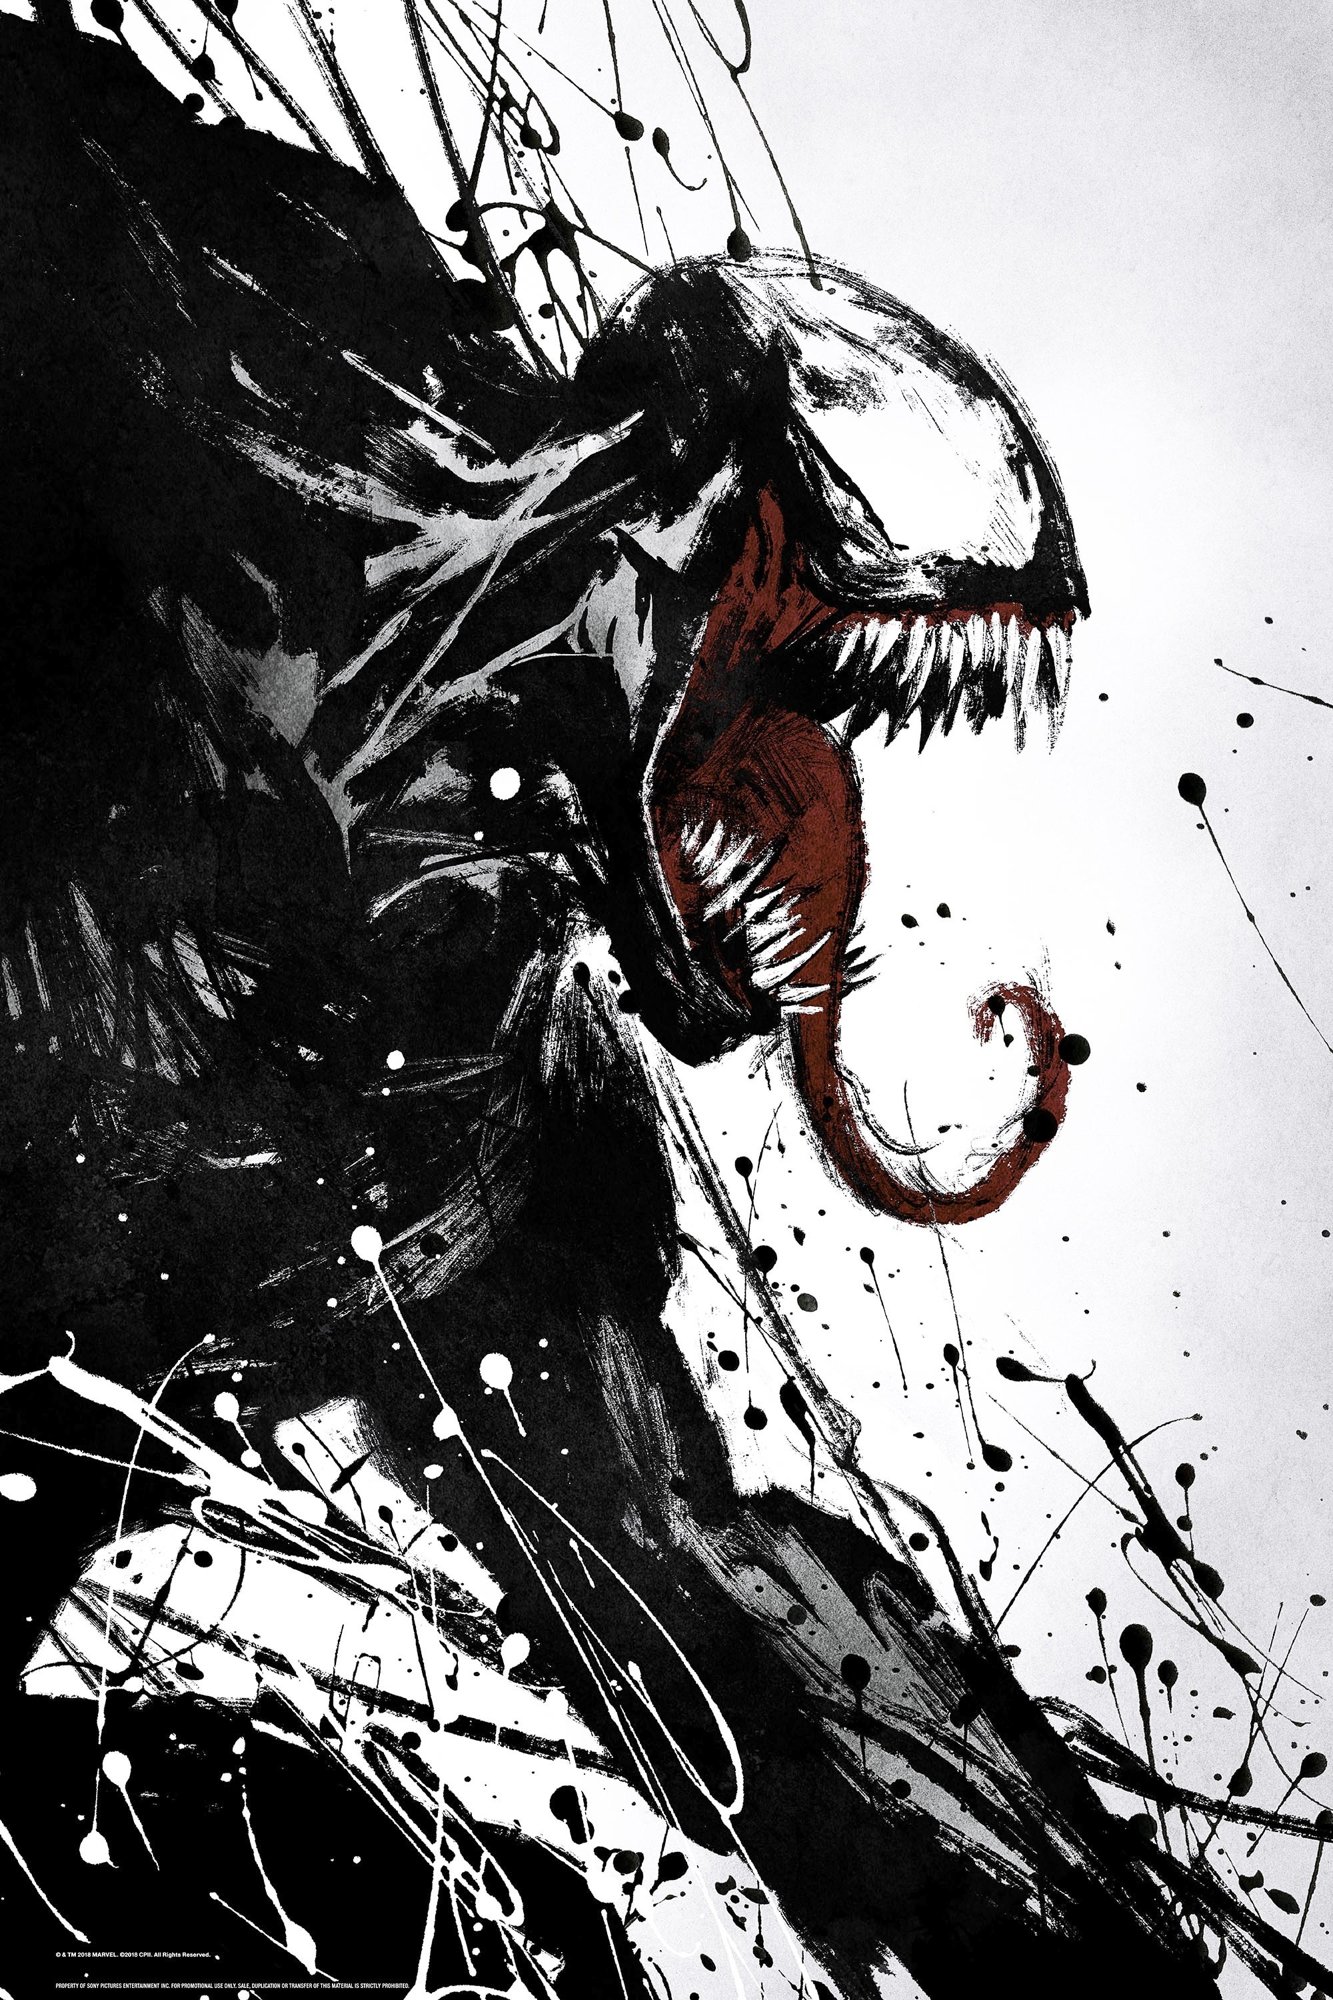 Poster of Columbia Pictures' Venom (2018)